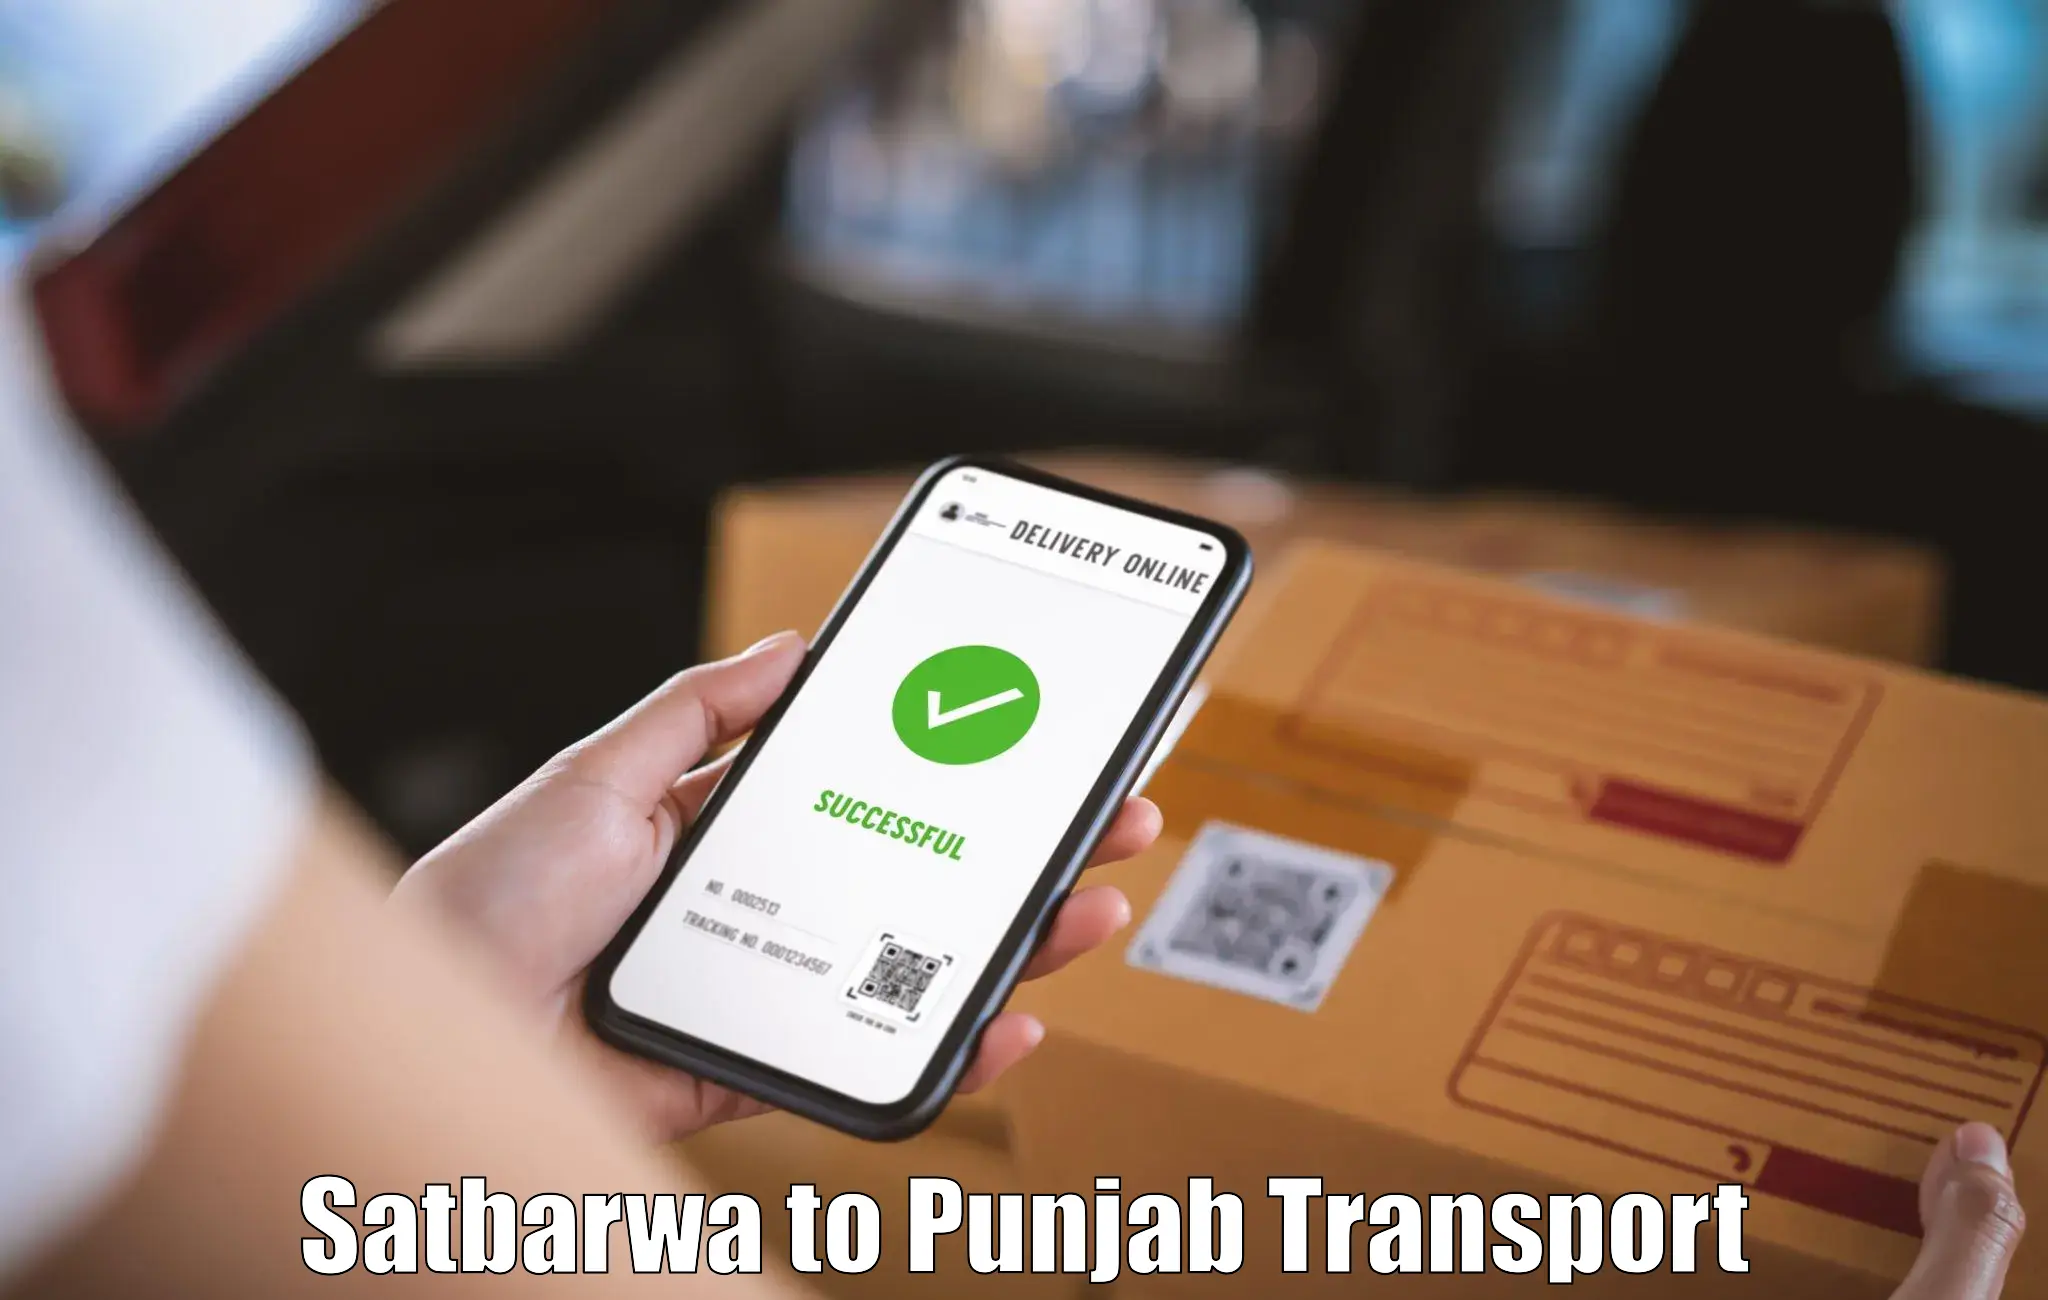 Truck transport companies in India Satbarwa to Jalandhar